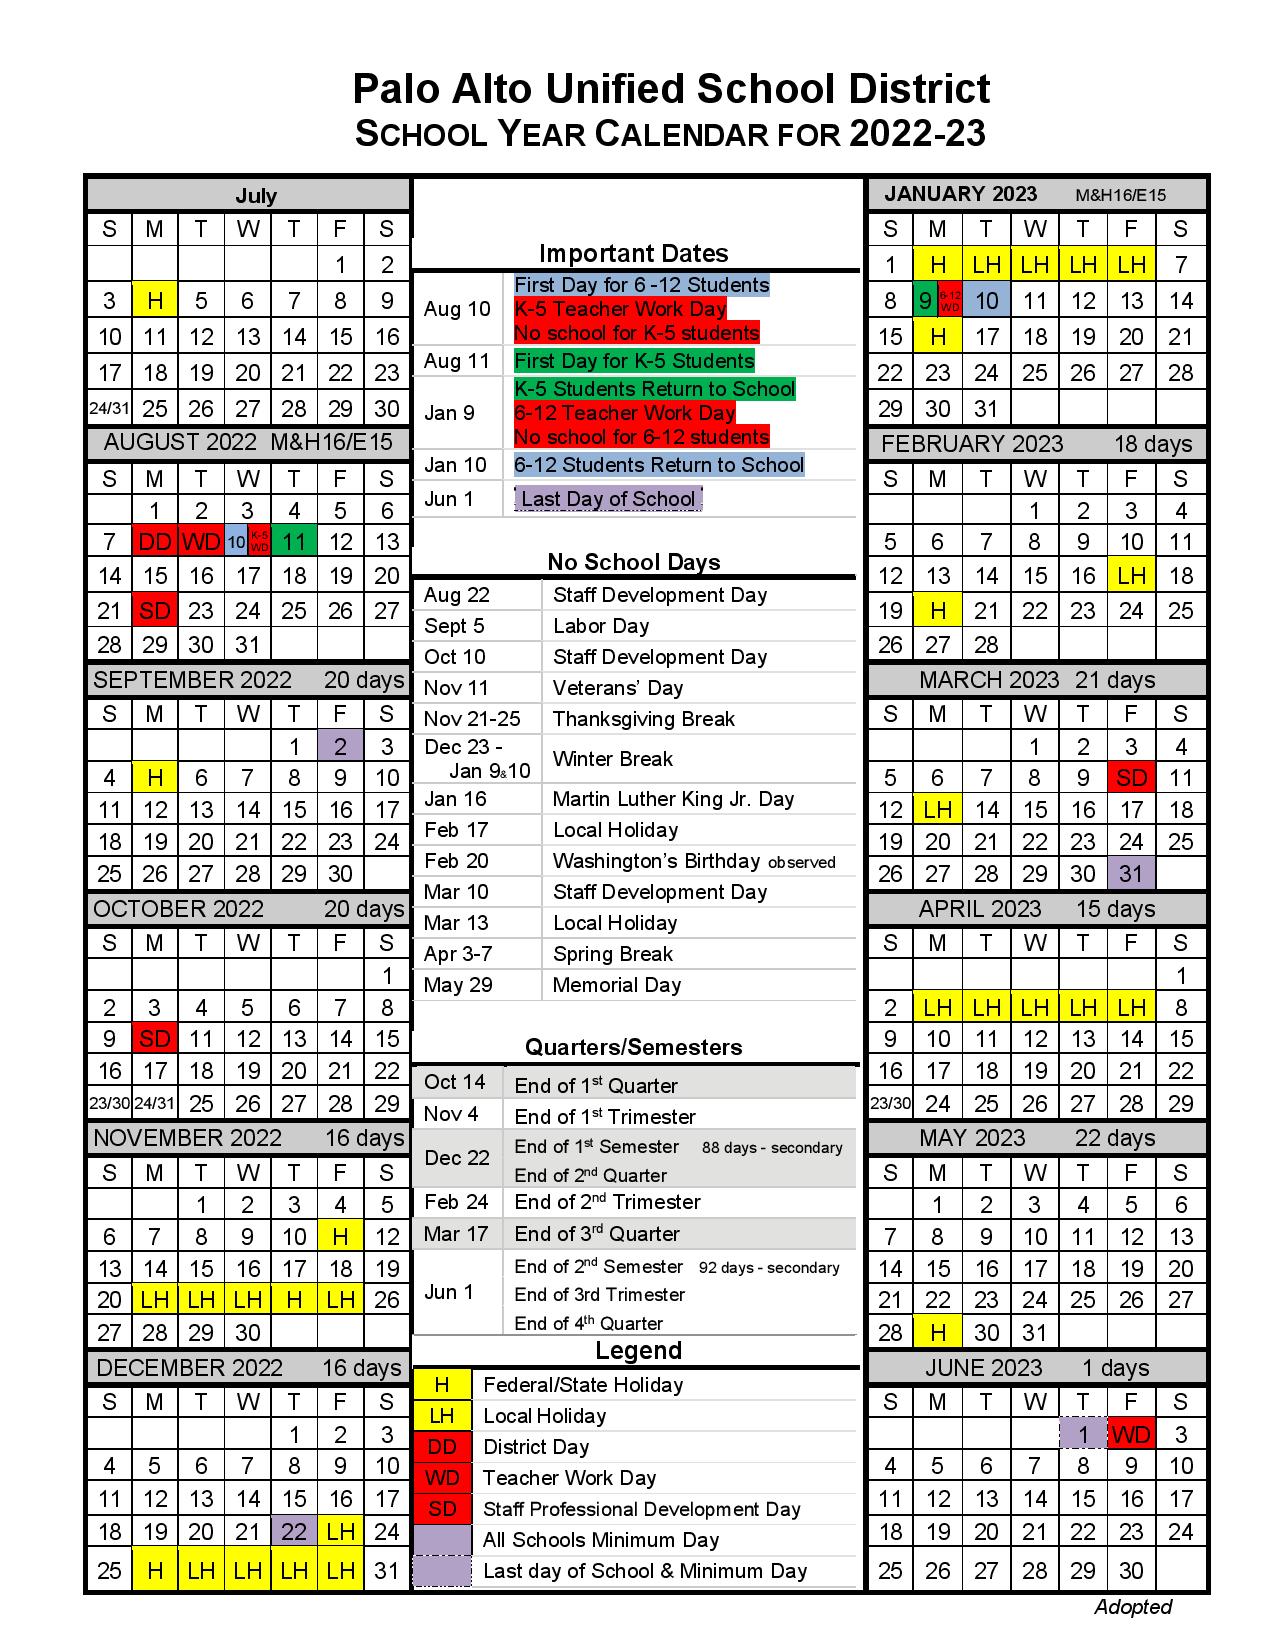 Palo Alto Unified School District Calendar 2022 2023